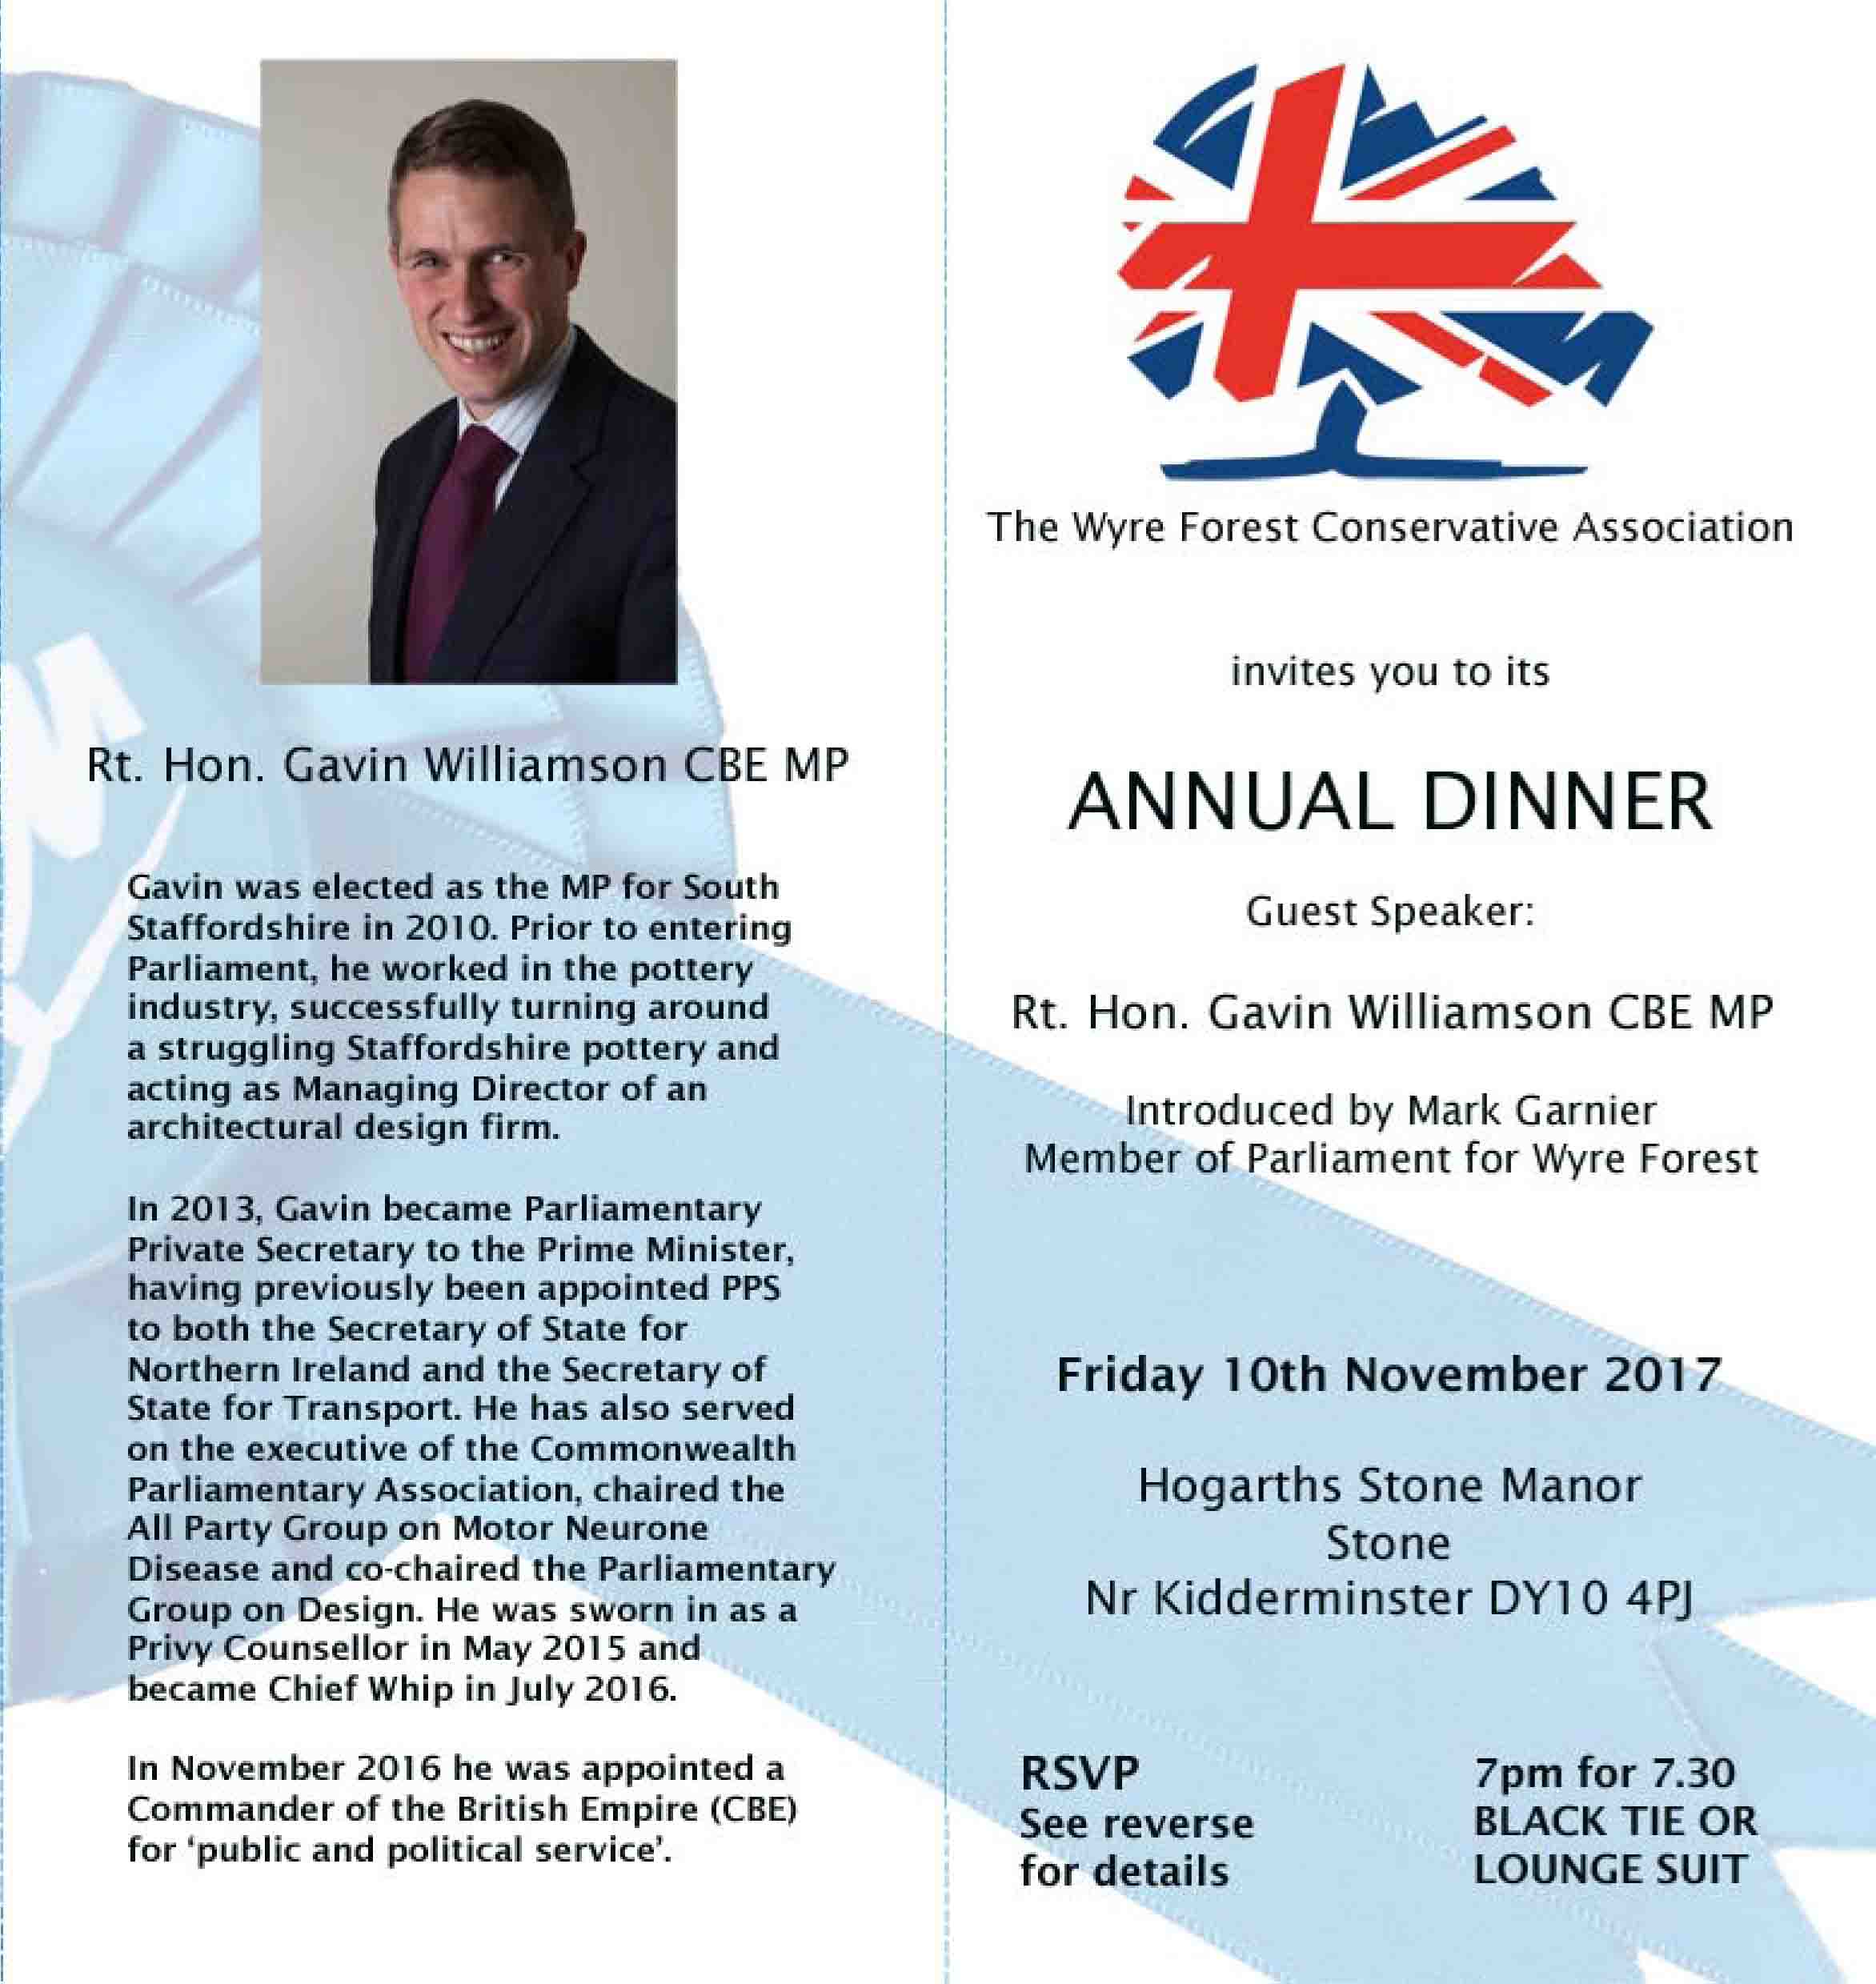 Details for Dinner and Guest Speaker